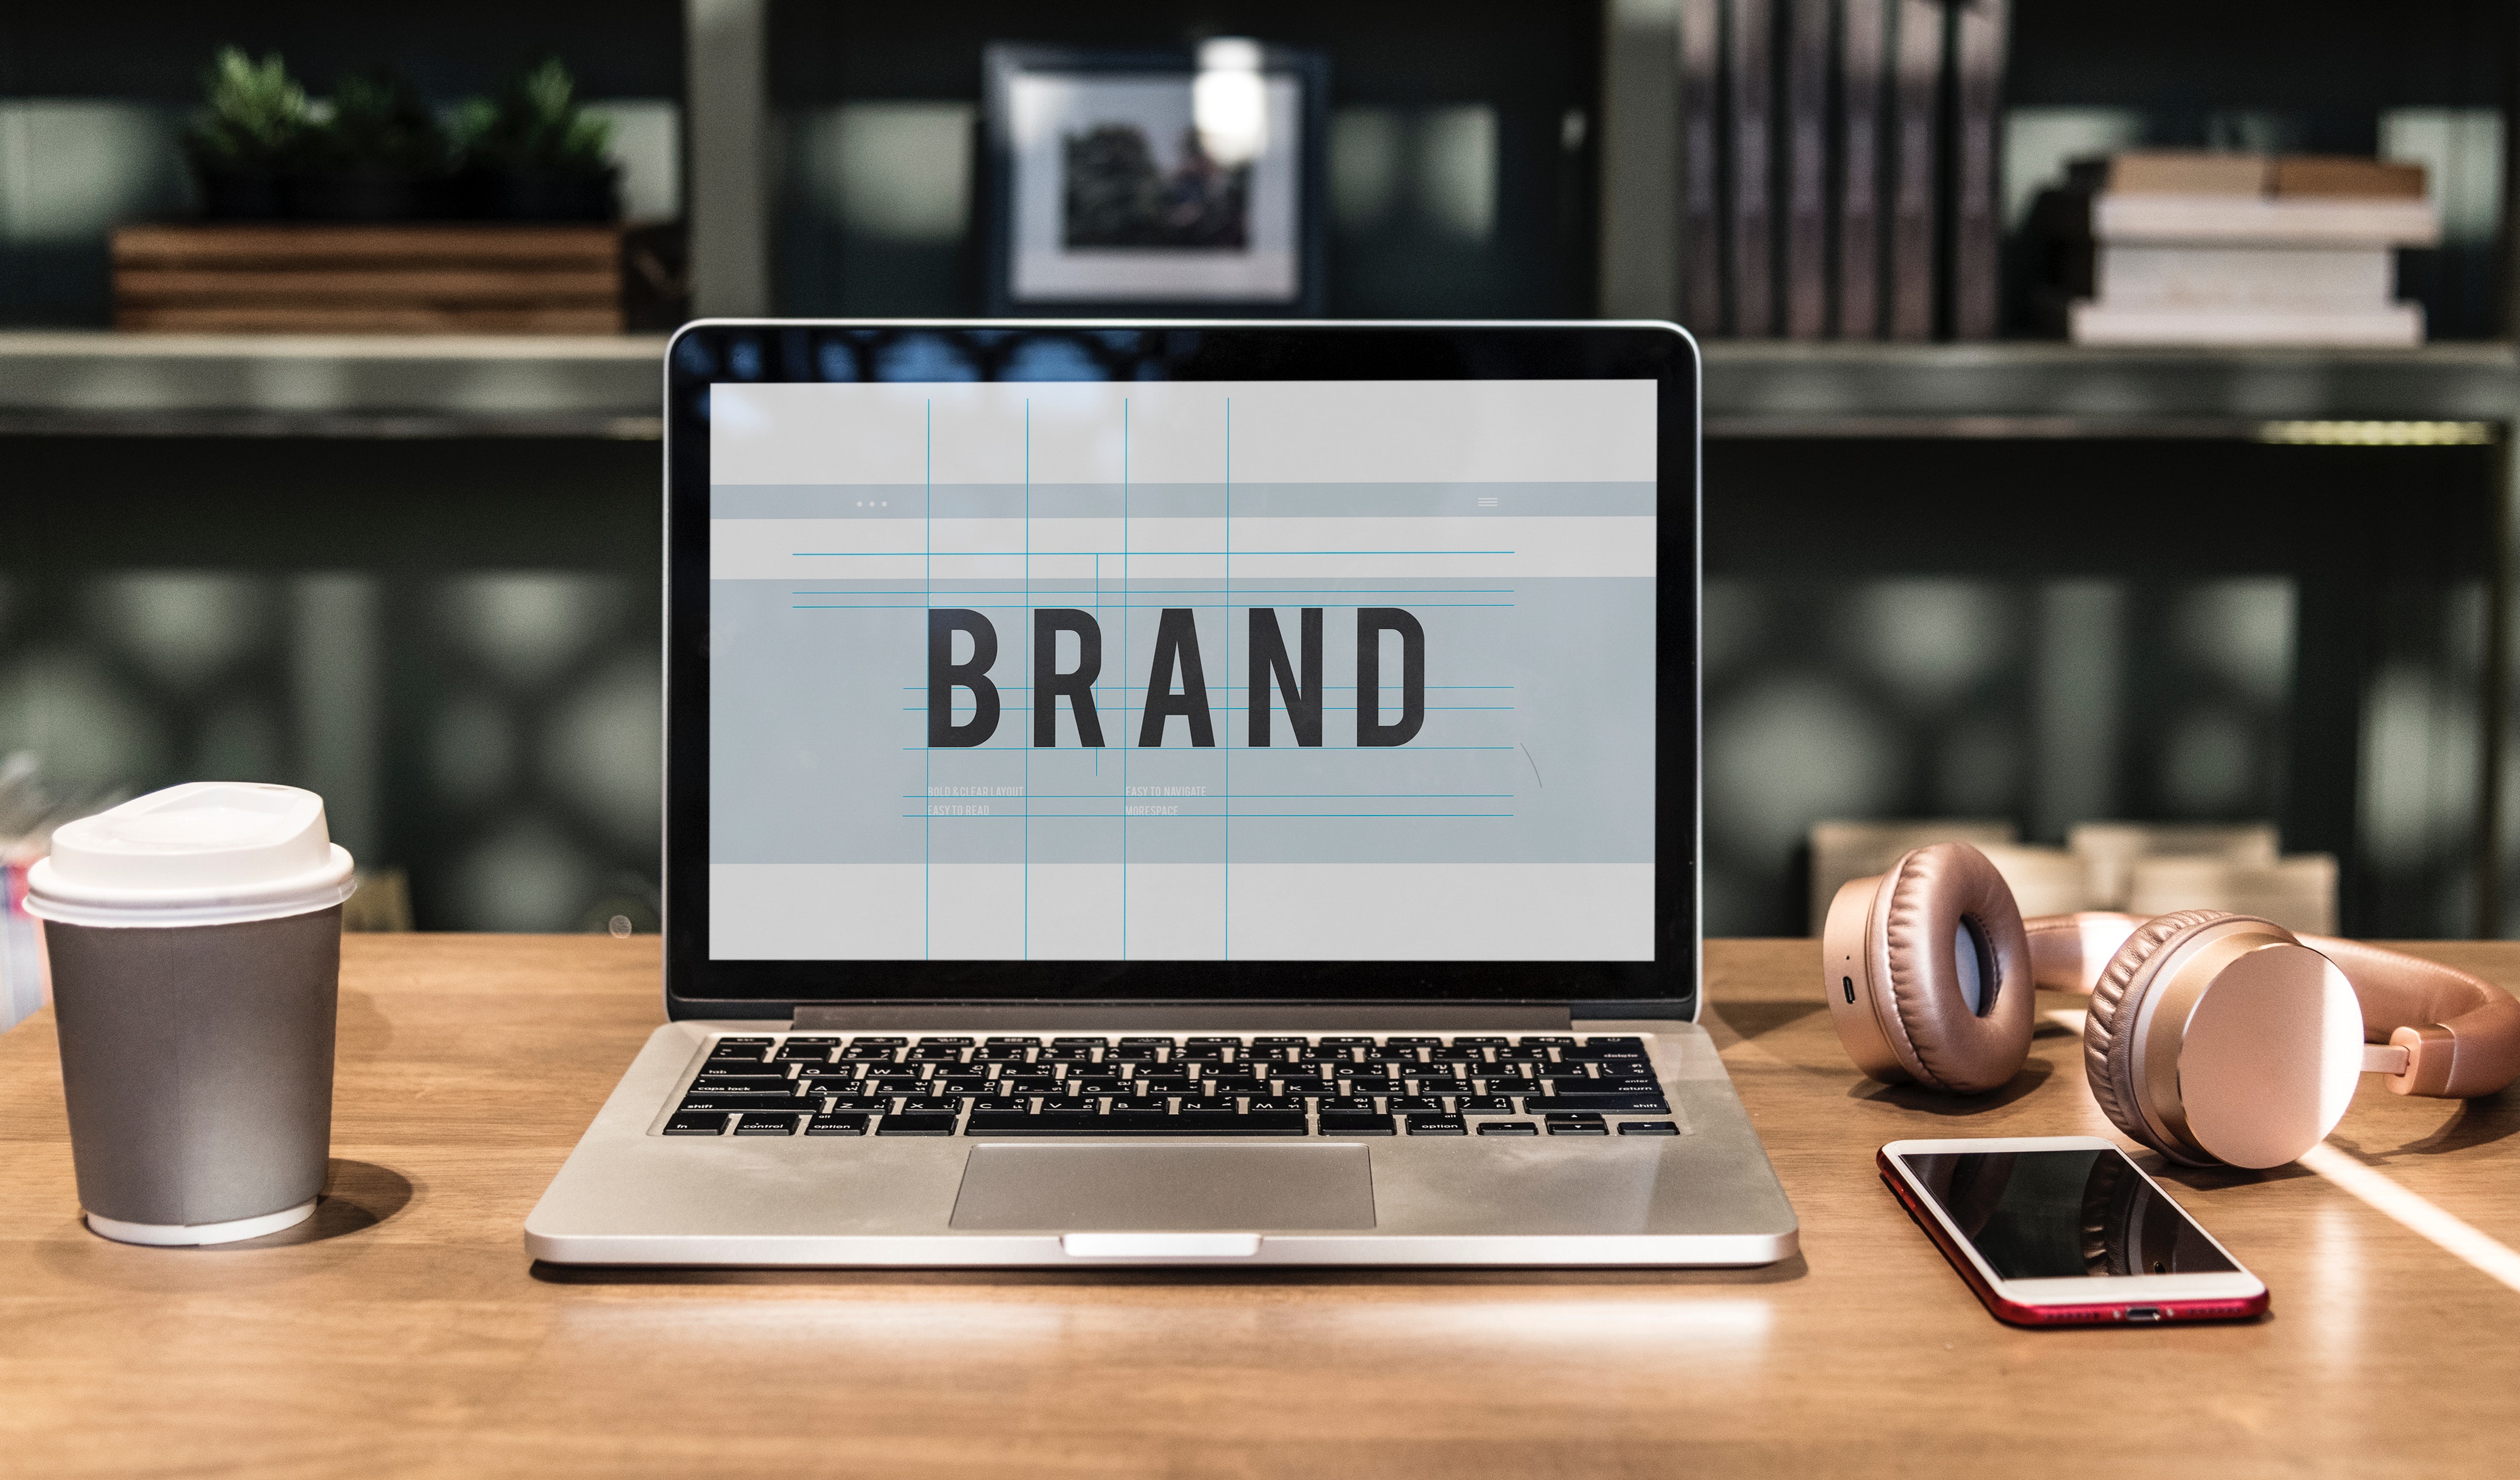 'Brand' on a laptop